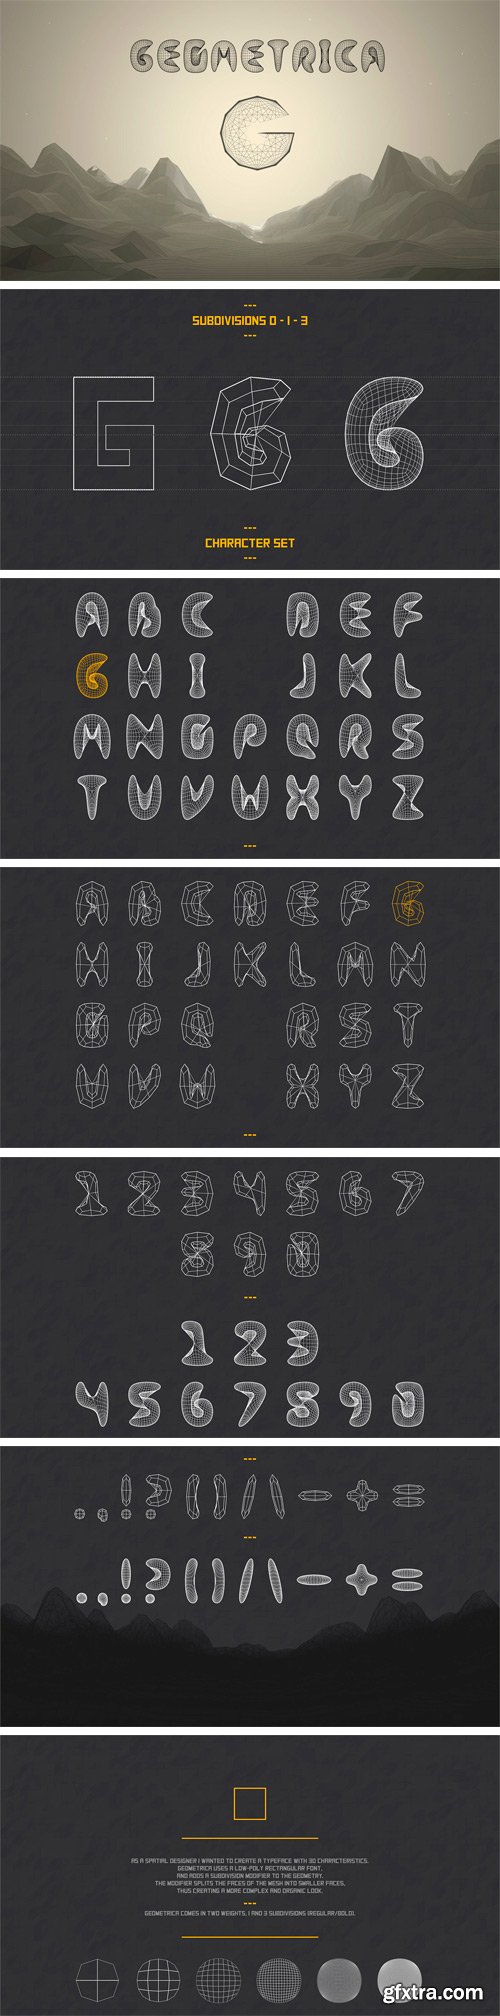 GEOMETRICA Typeface